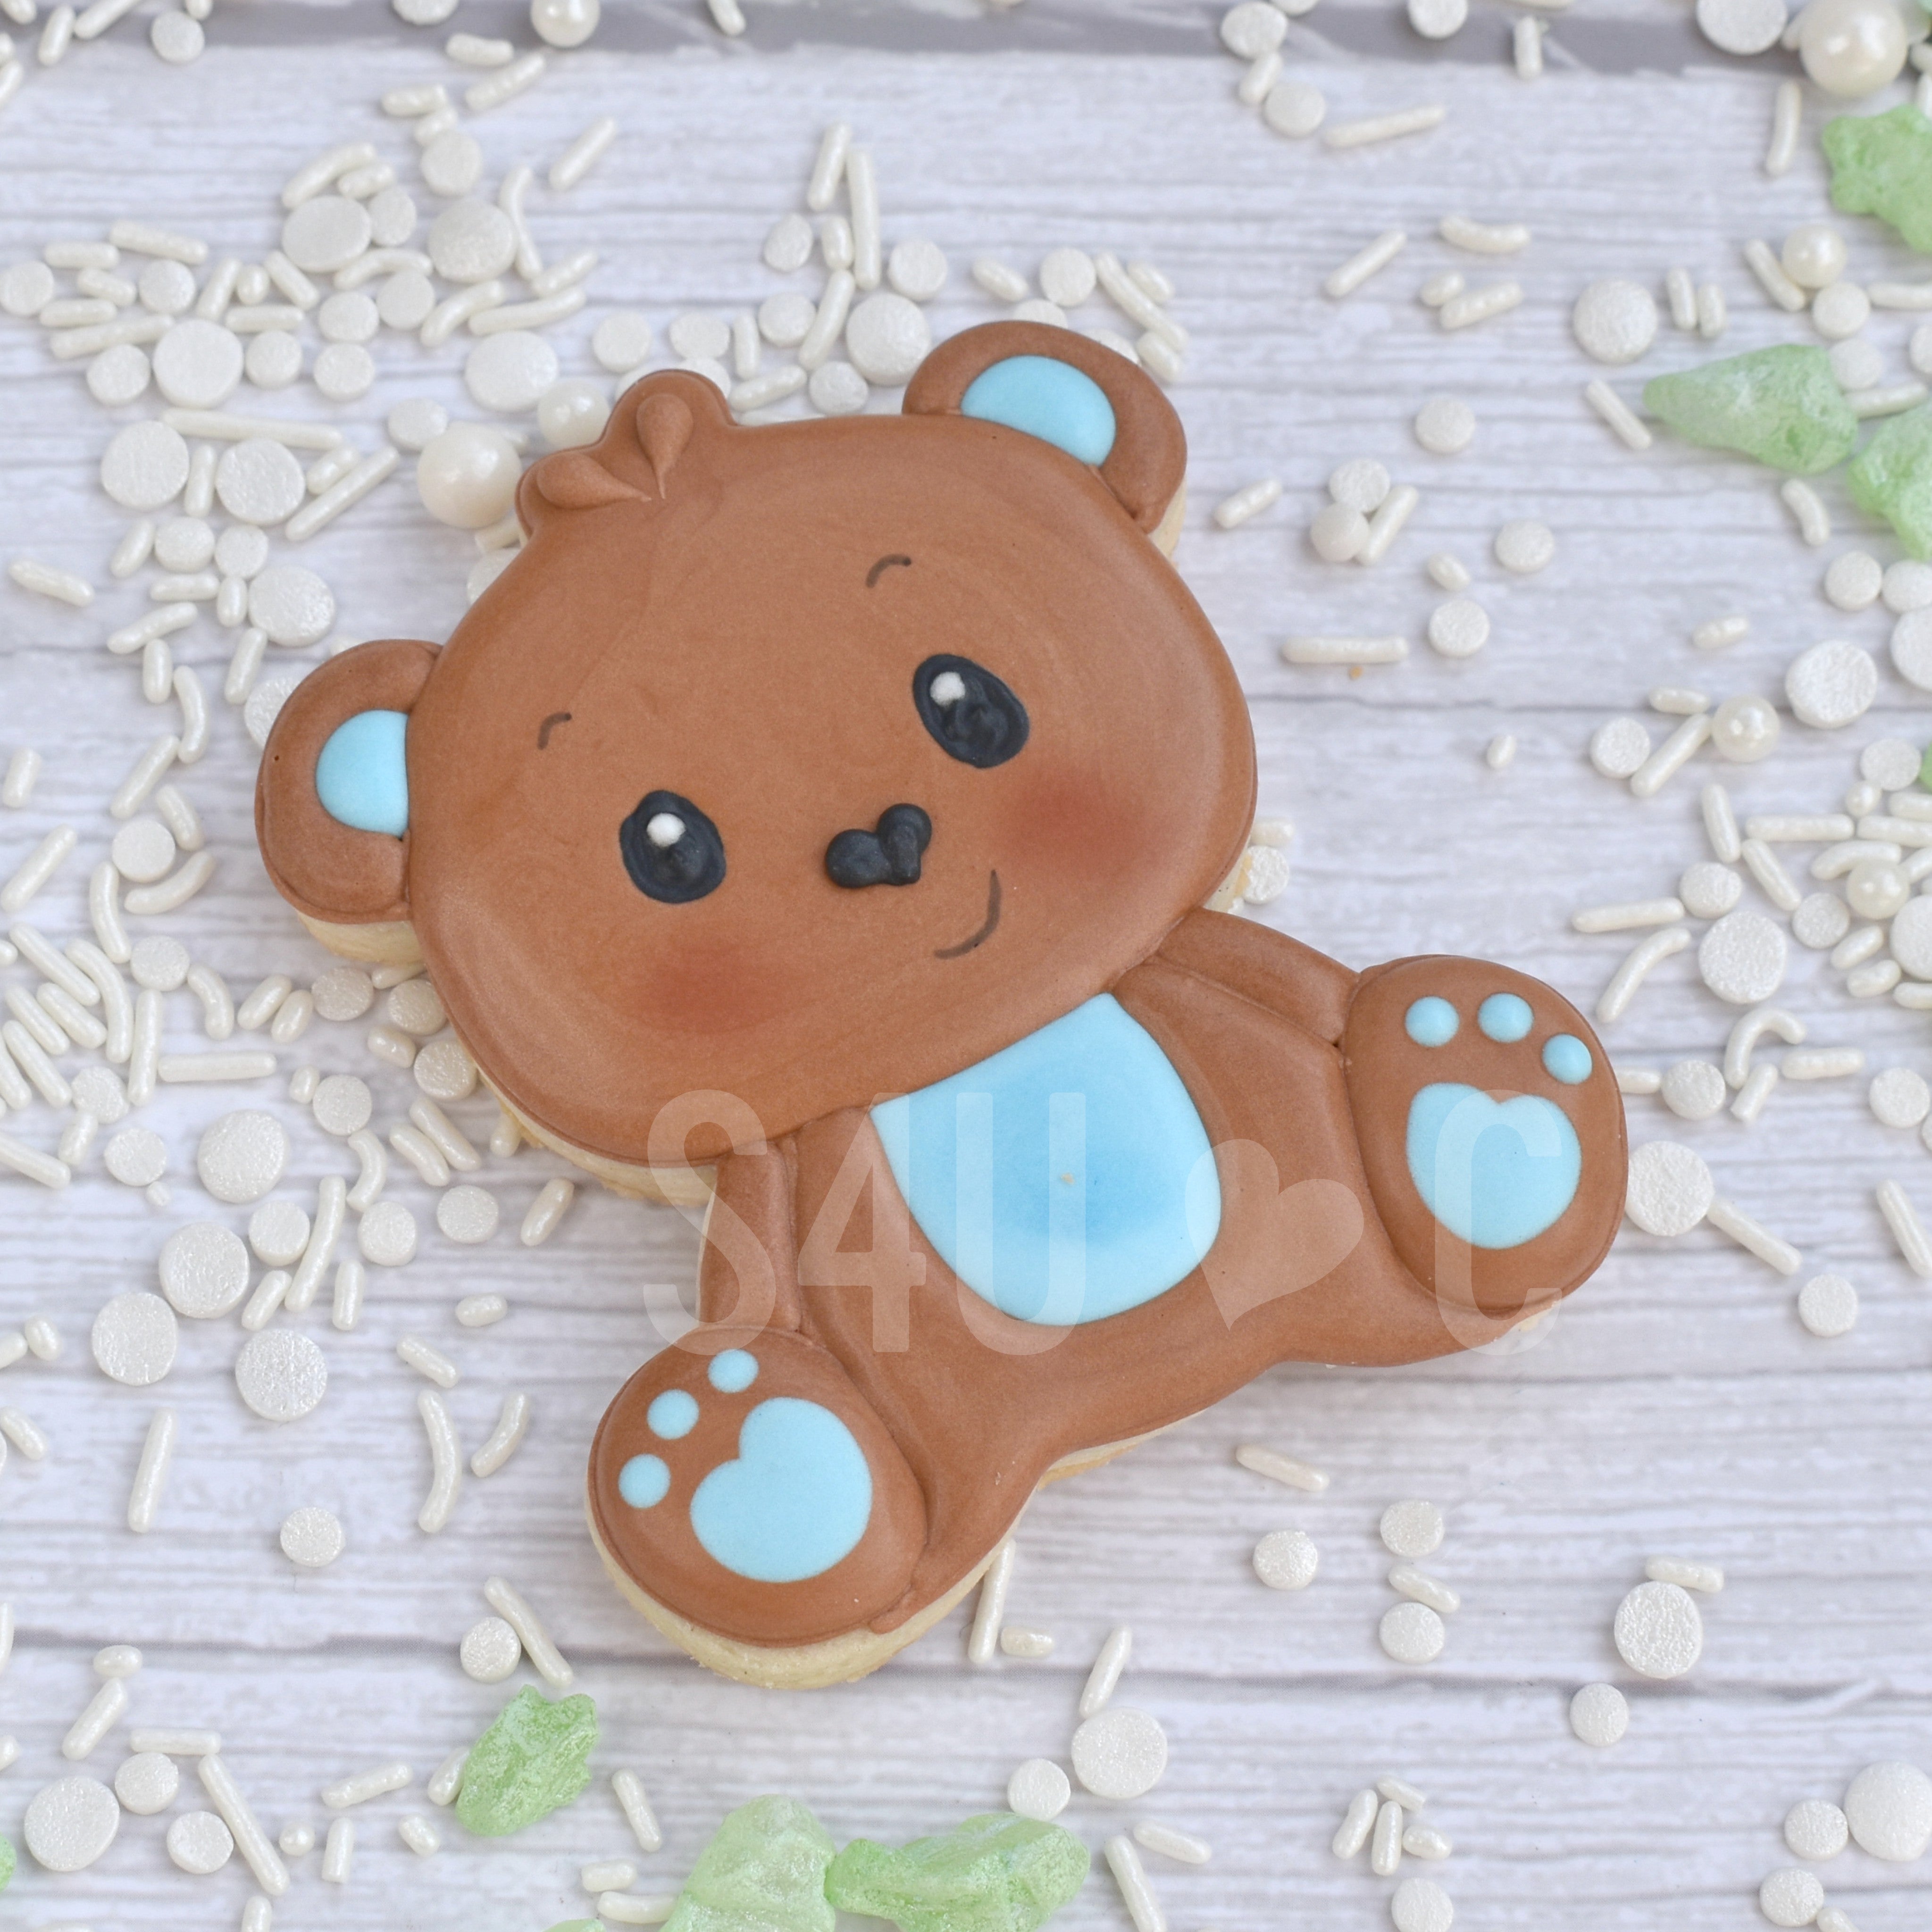 Teddy Bear Cookie cutter